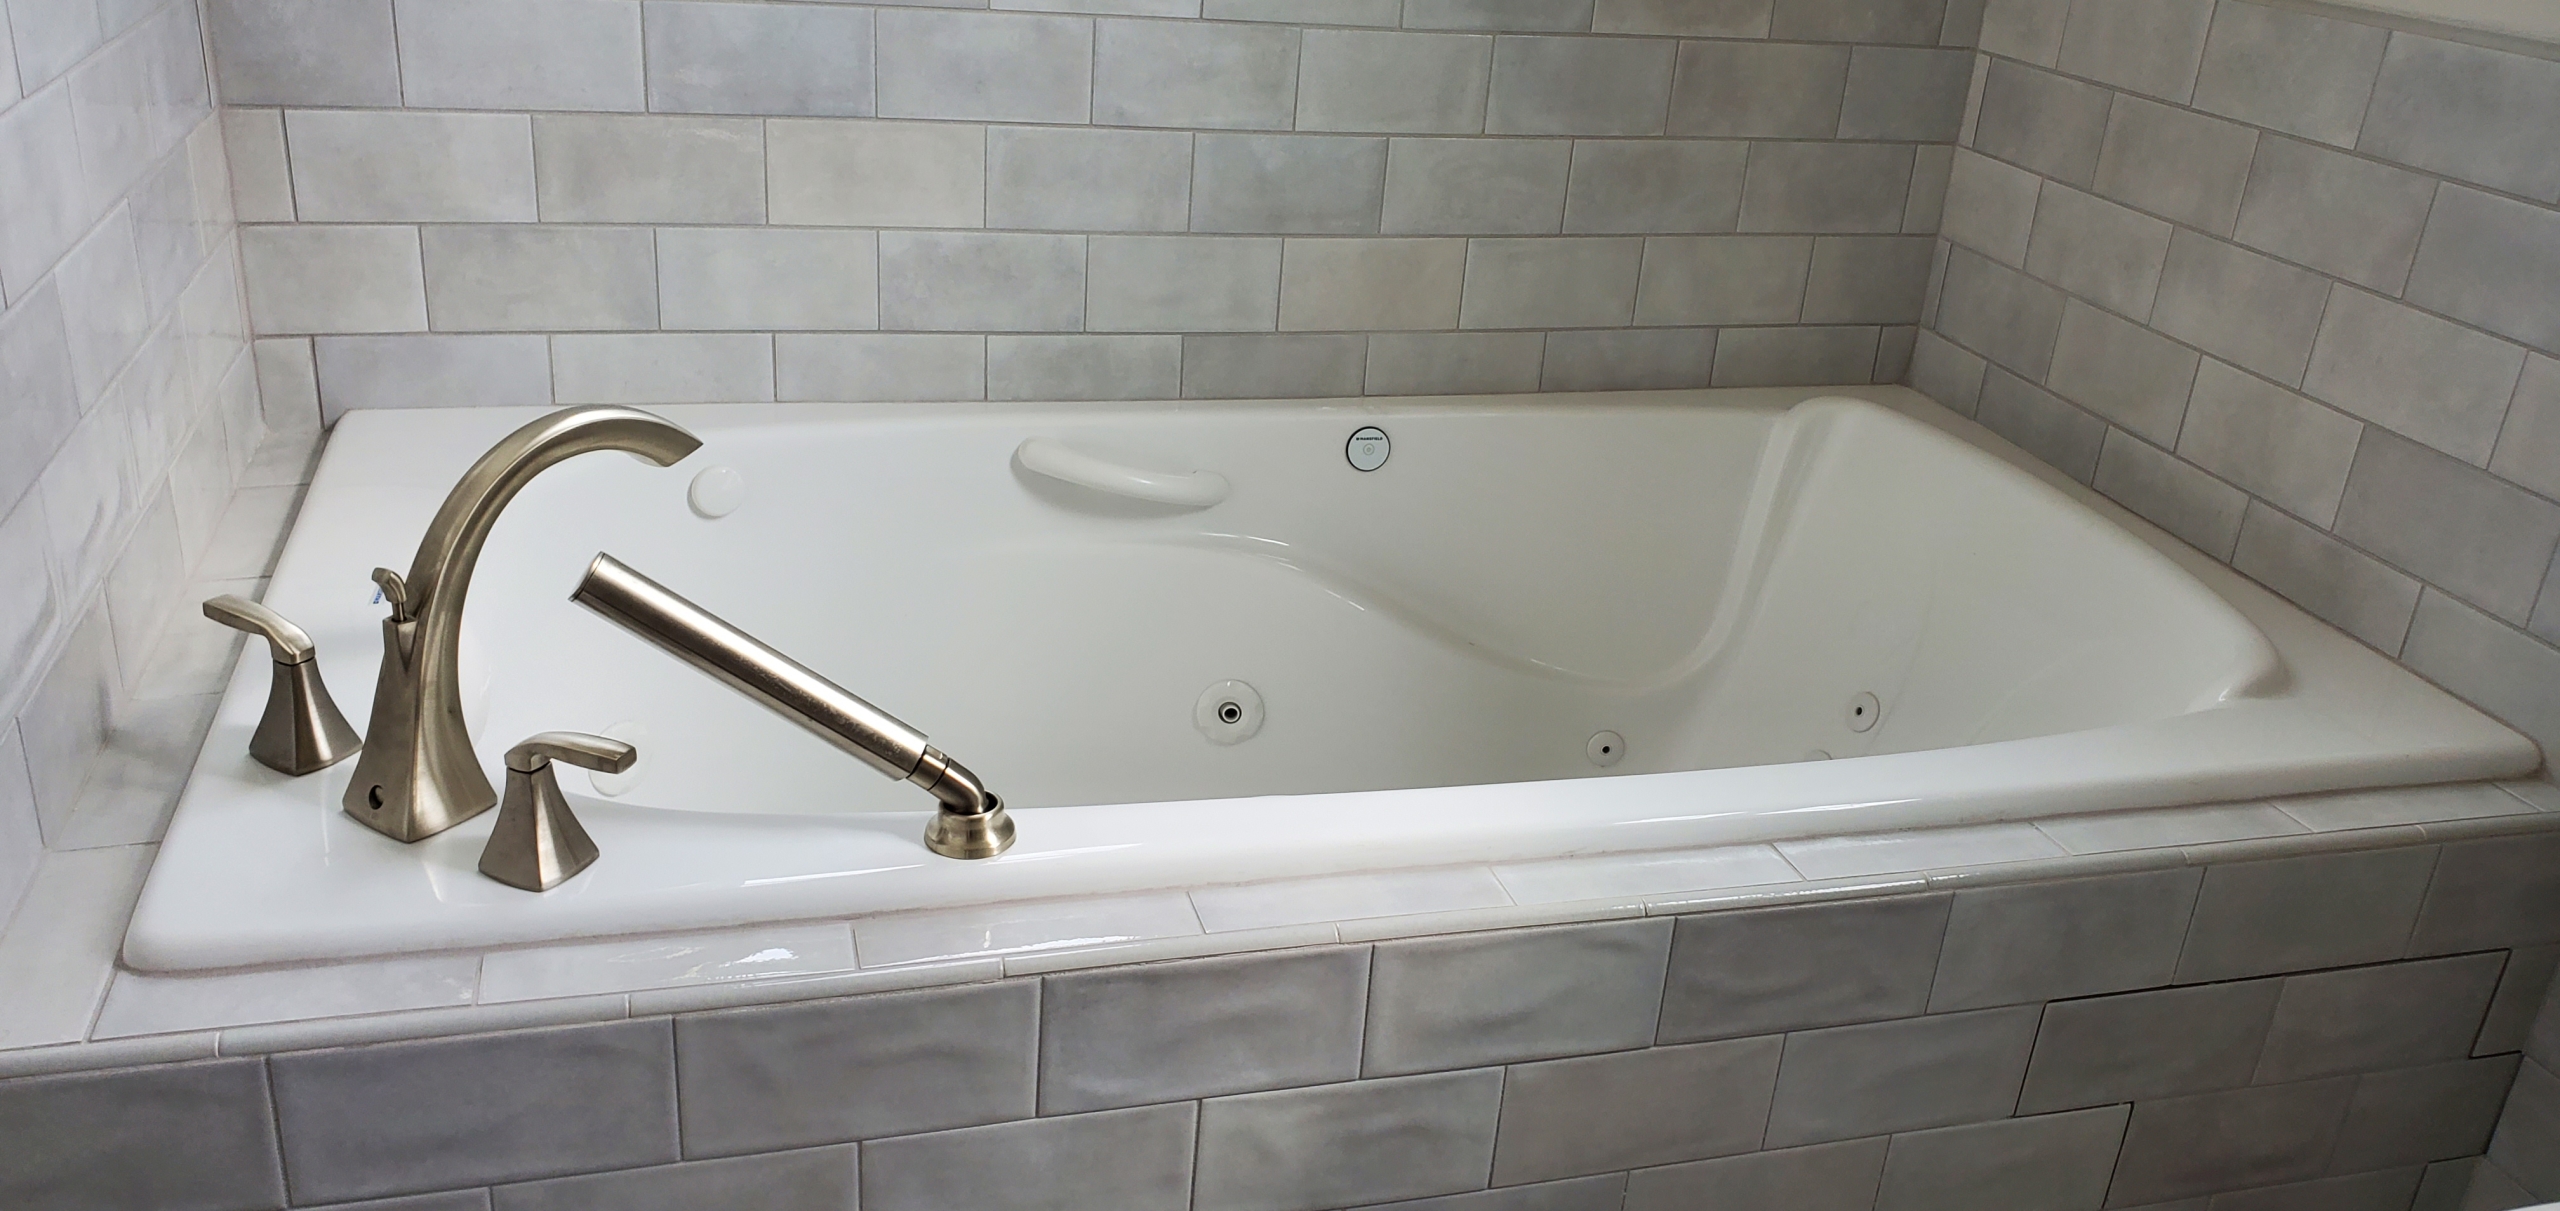 Custom home bathtub with tile surround